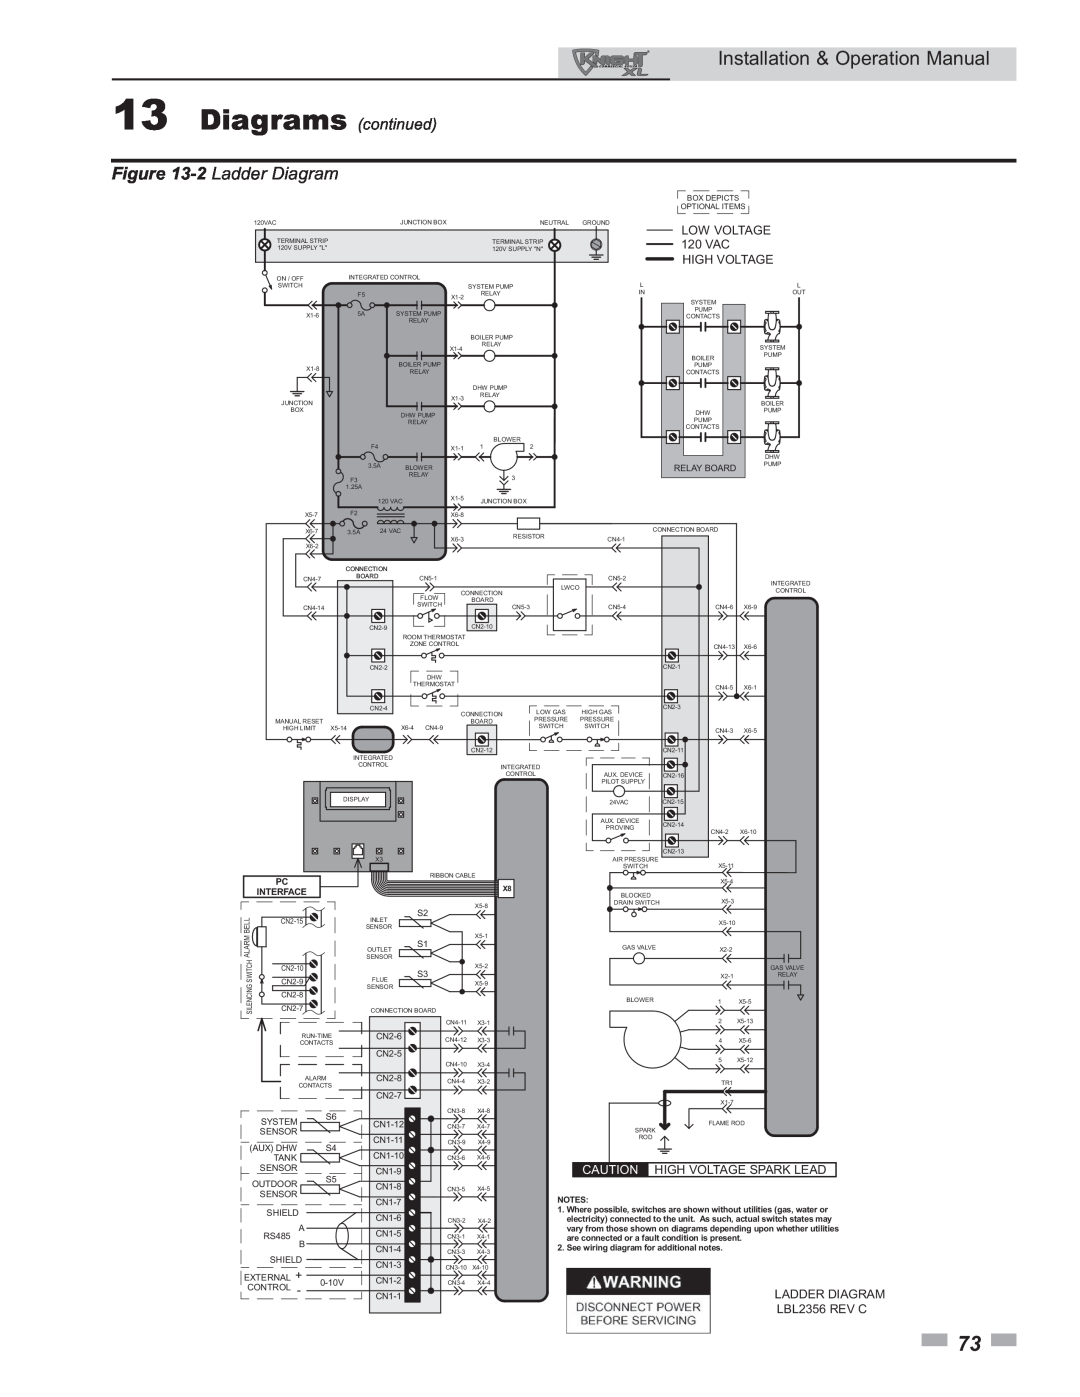 Lochinvar 399 operation manual 2 Ladder Diagram, Diagrams continued 